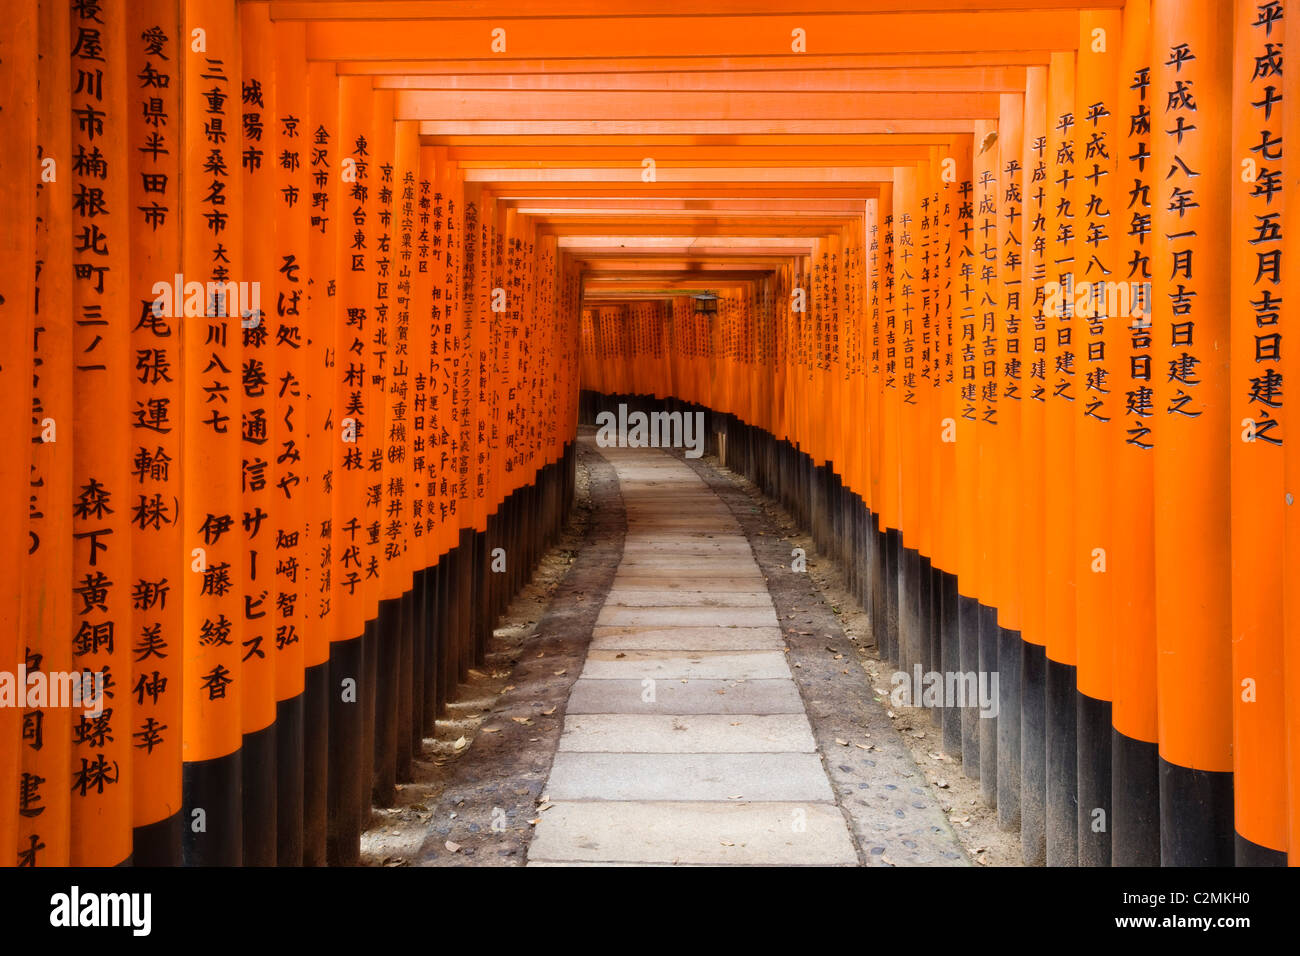 Fushimi Inari Shrine Columns High Resolution Stock Photography And Images Alamy